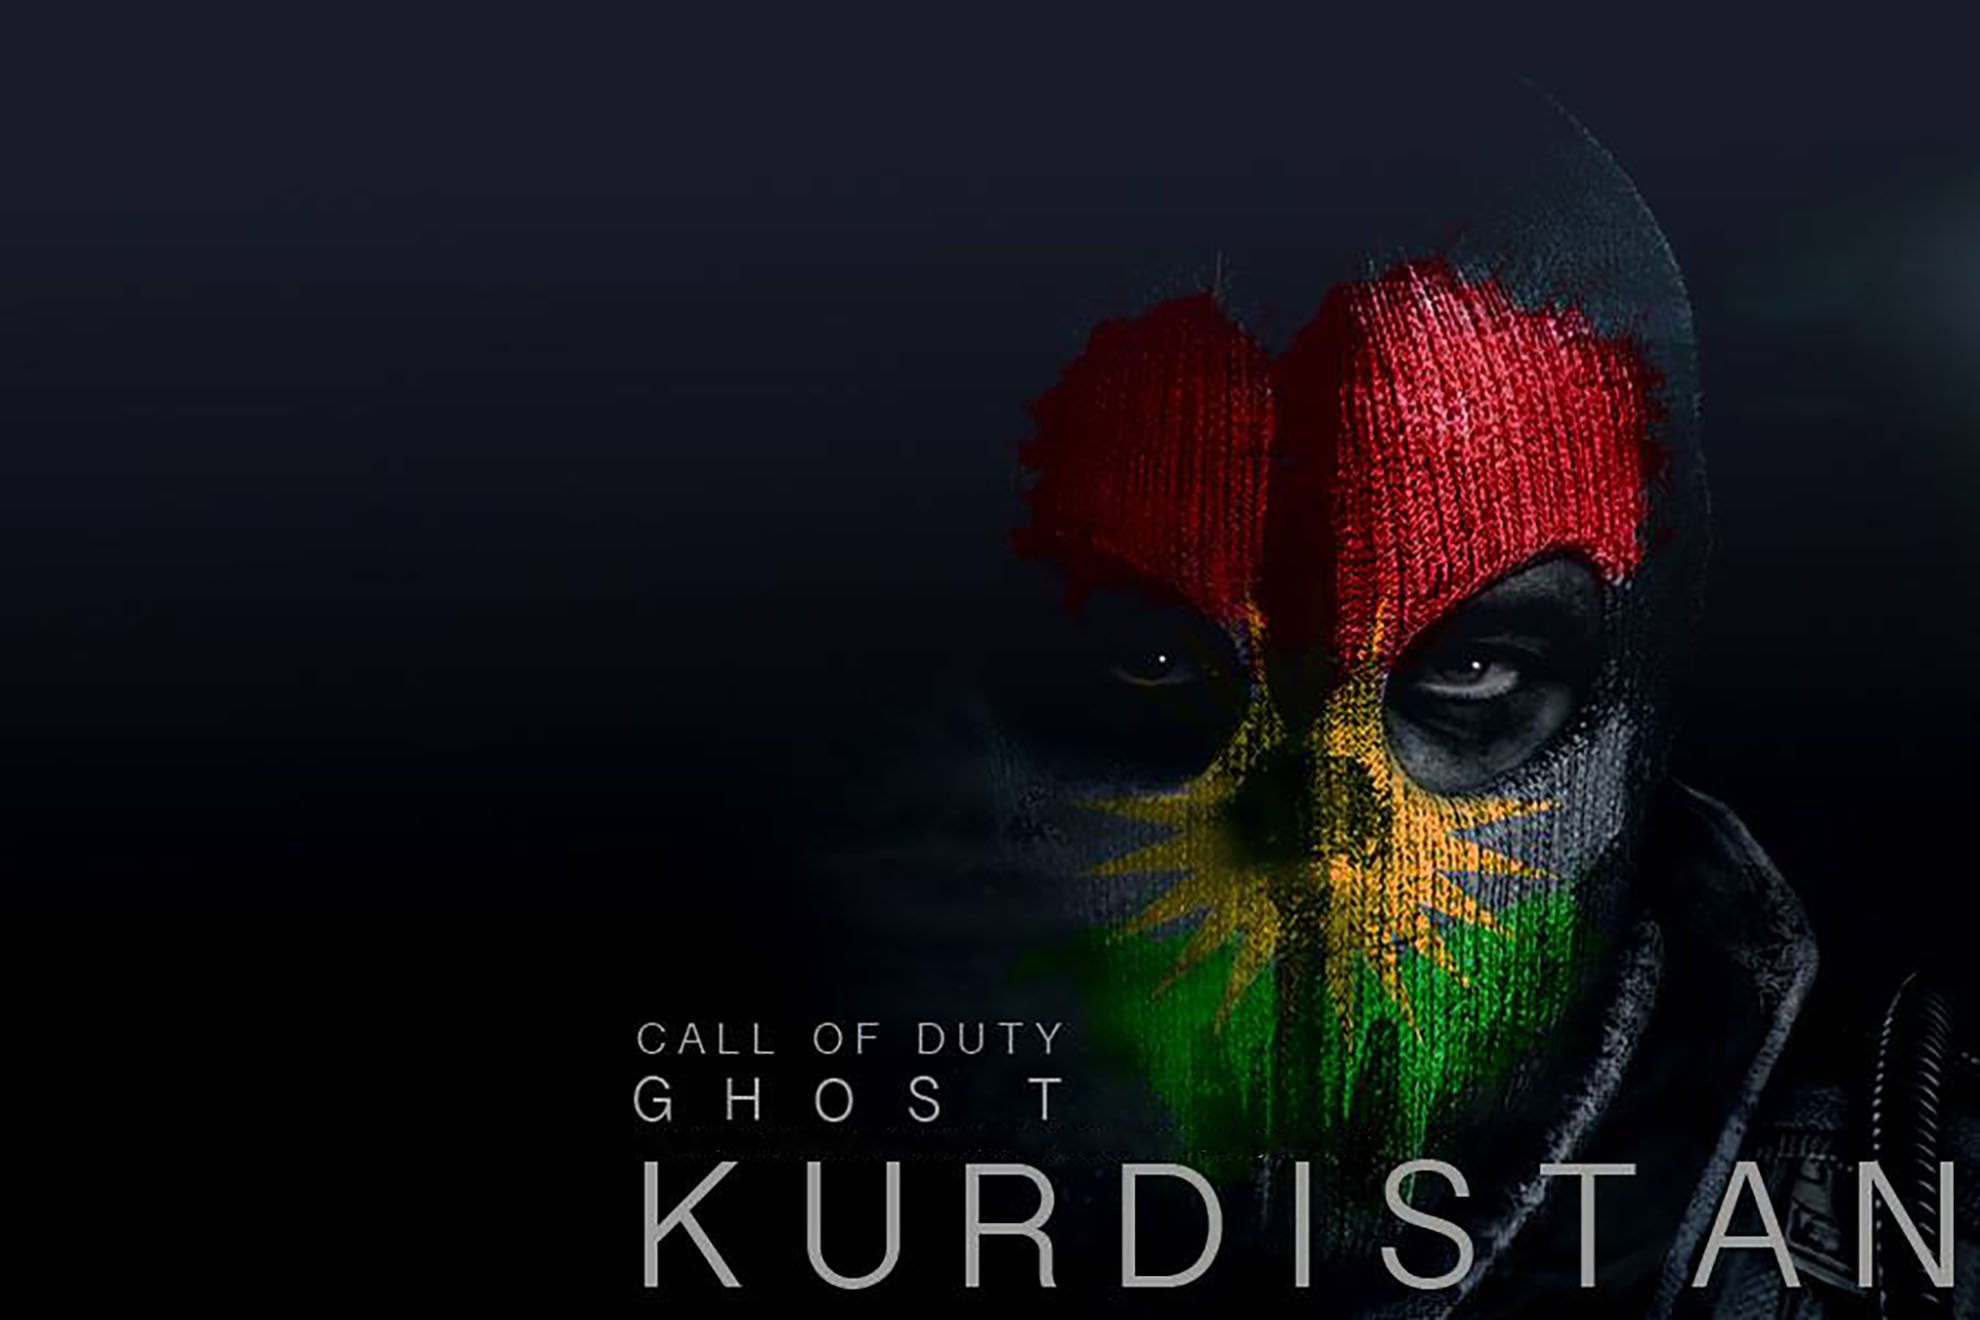 kurdistan, Kurd, Kurds, Kurdish, Call, Duty, Military Wallpaper